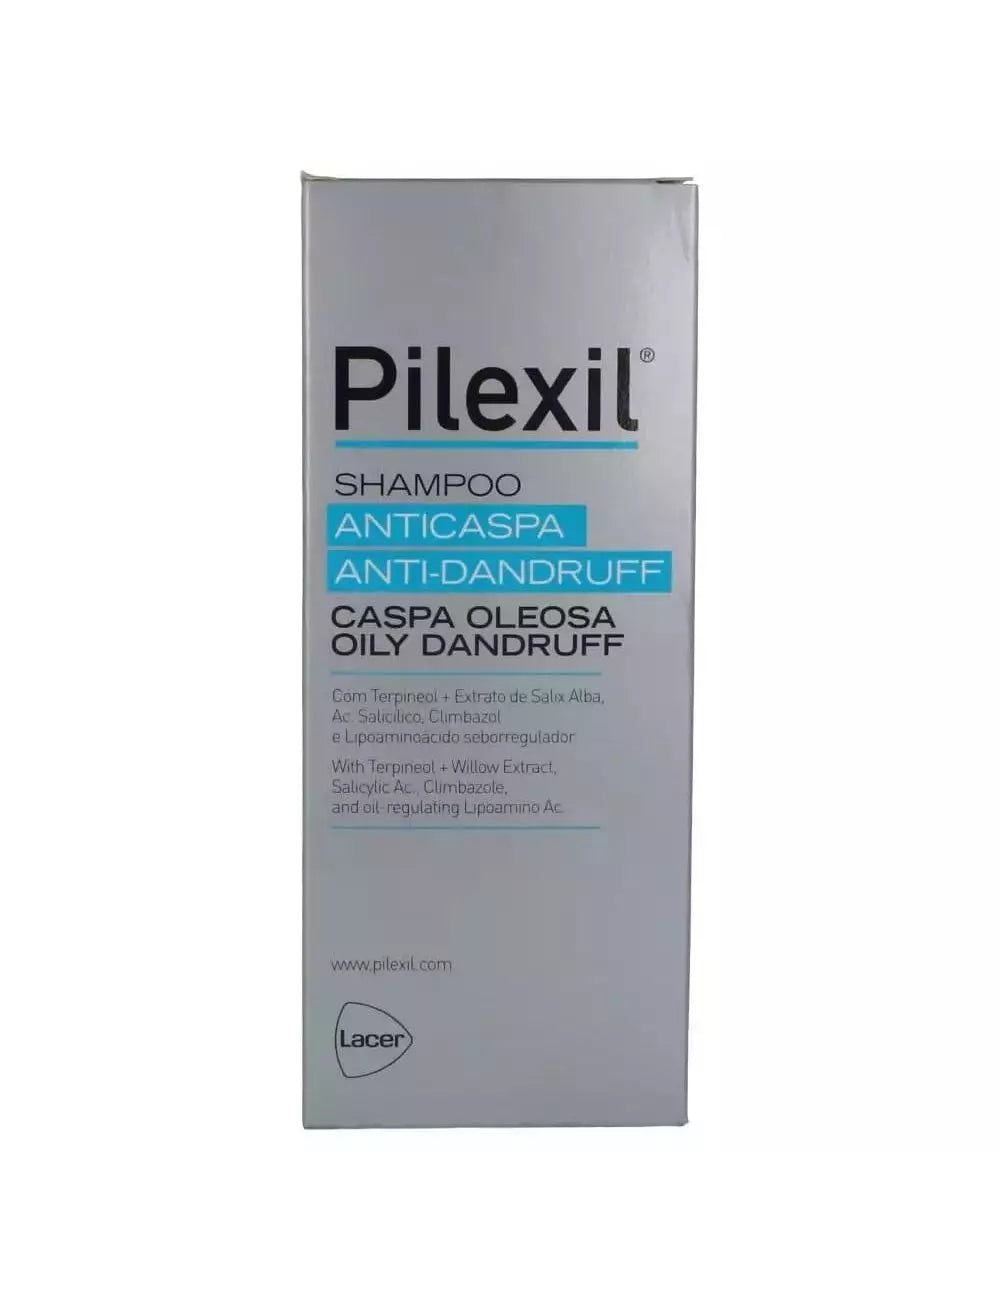 Pilexil Shampoo Anticaspa Caspa Oleosa (300ml)